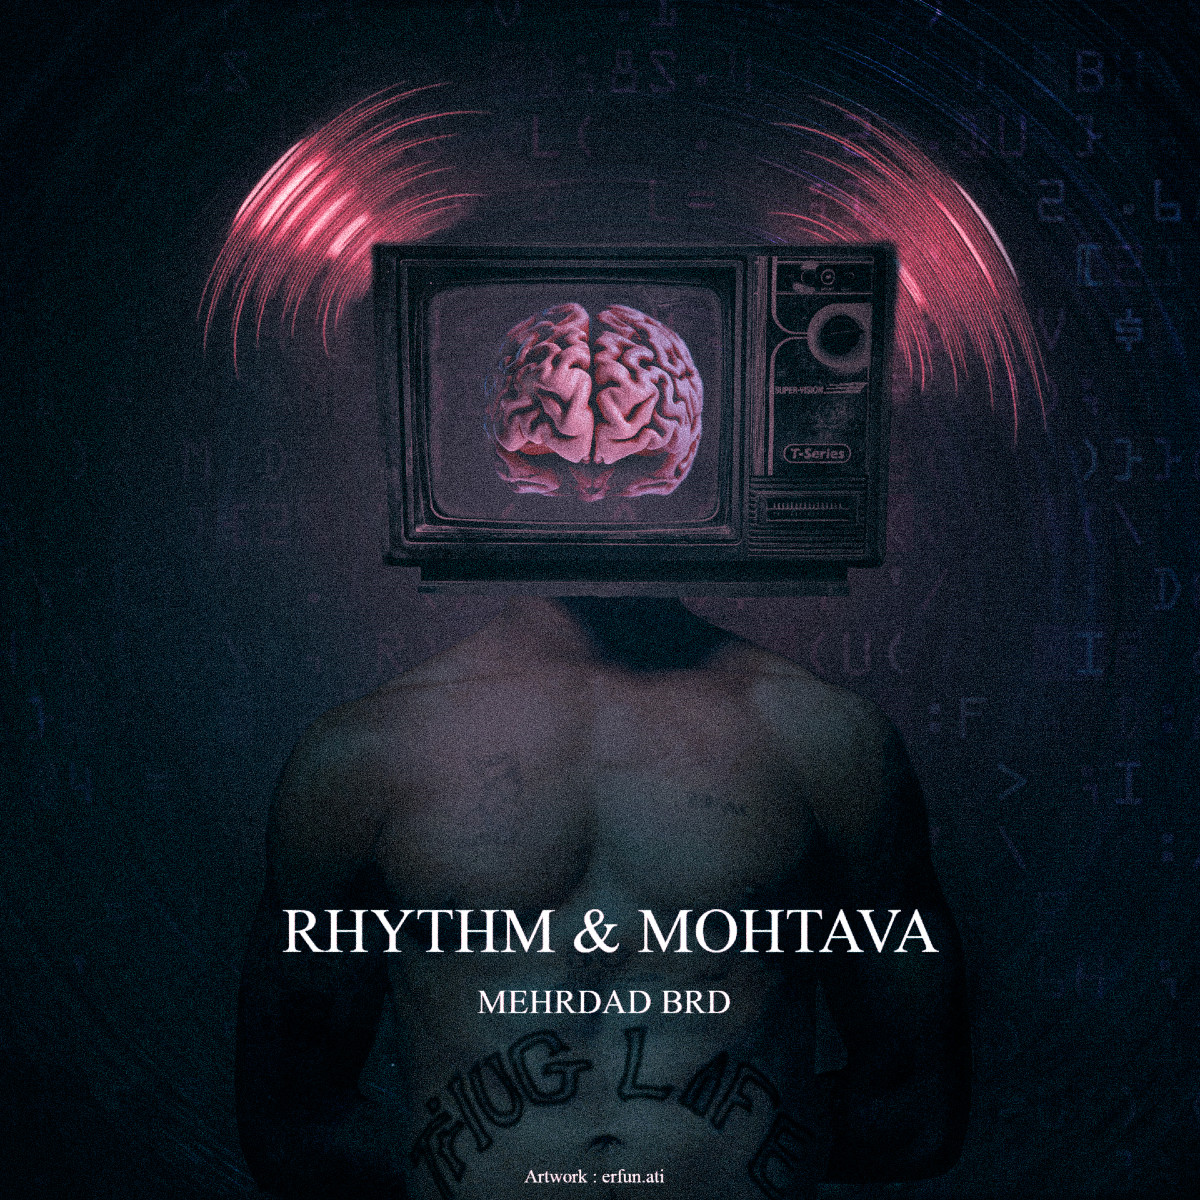 Mehrdad B.R.D - Rhythm & Mohtava Album